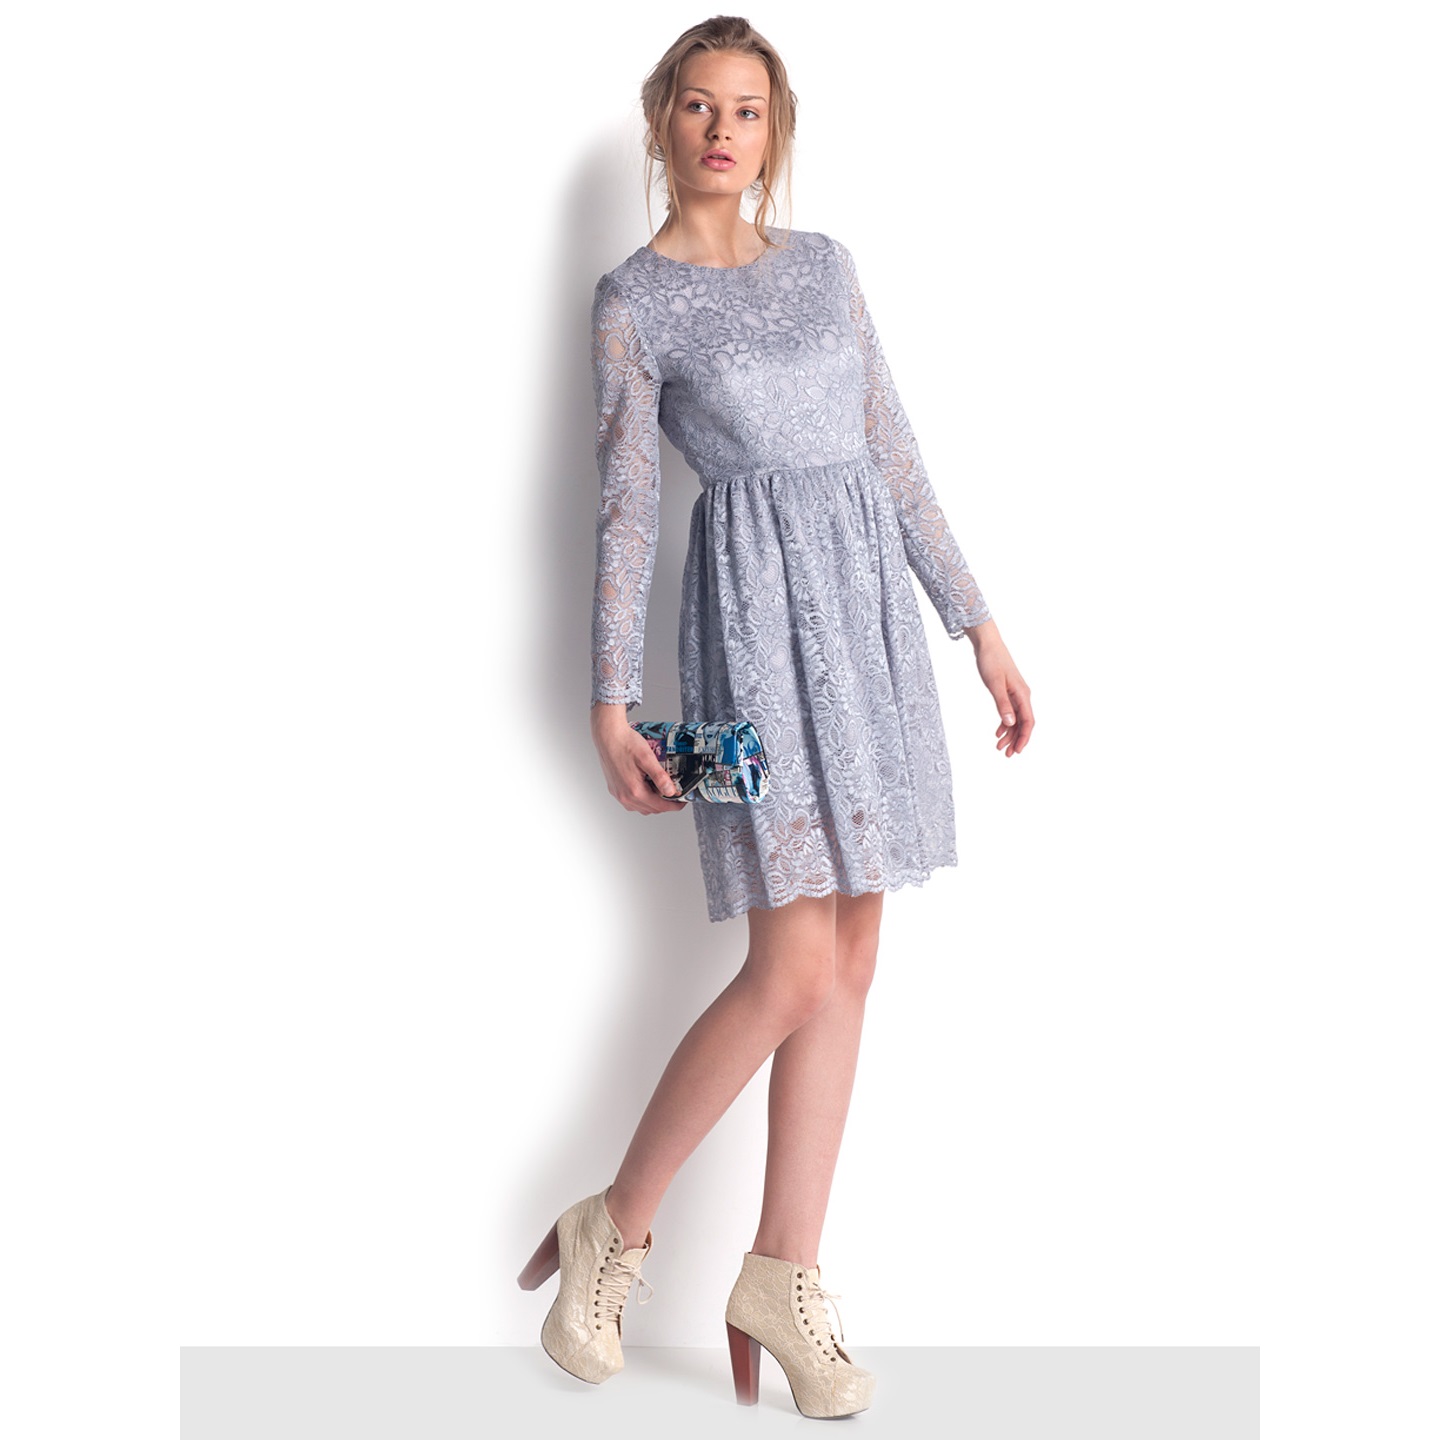 8. Silver Lace Dress 04498